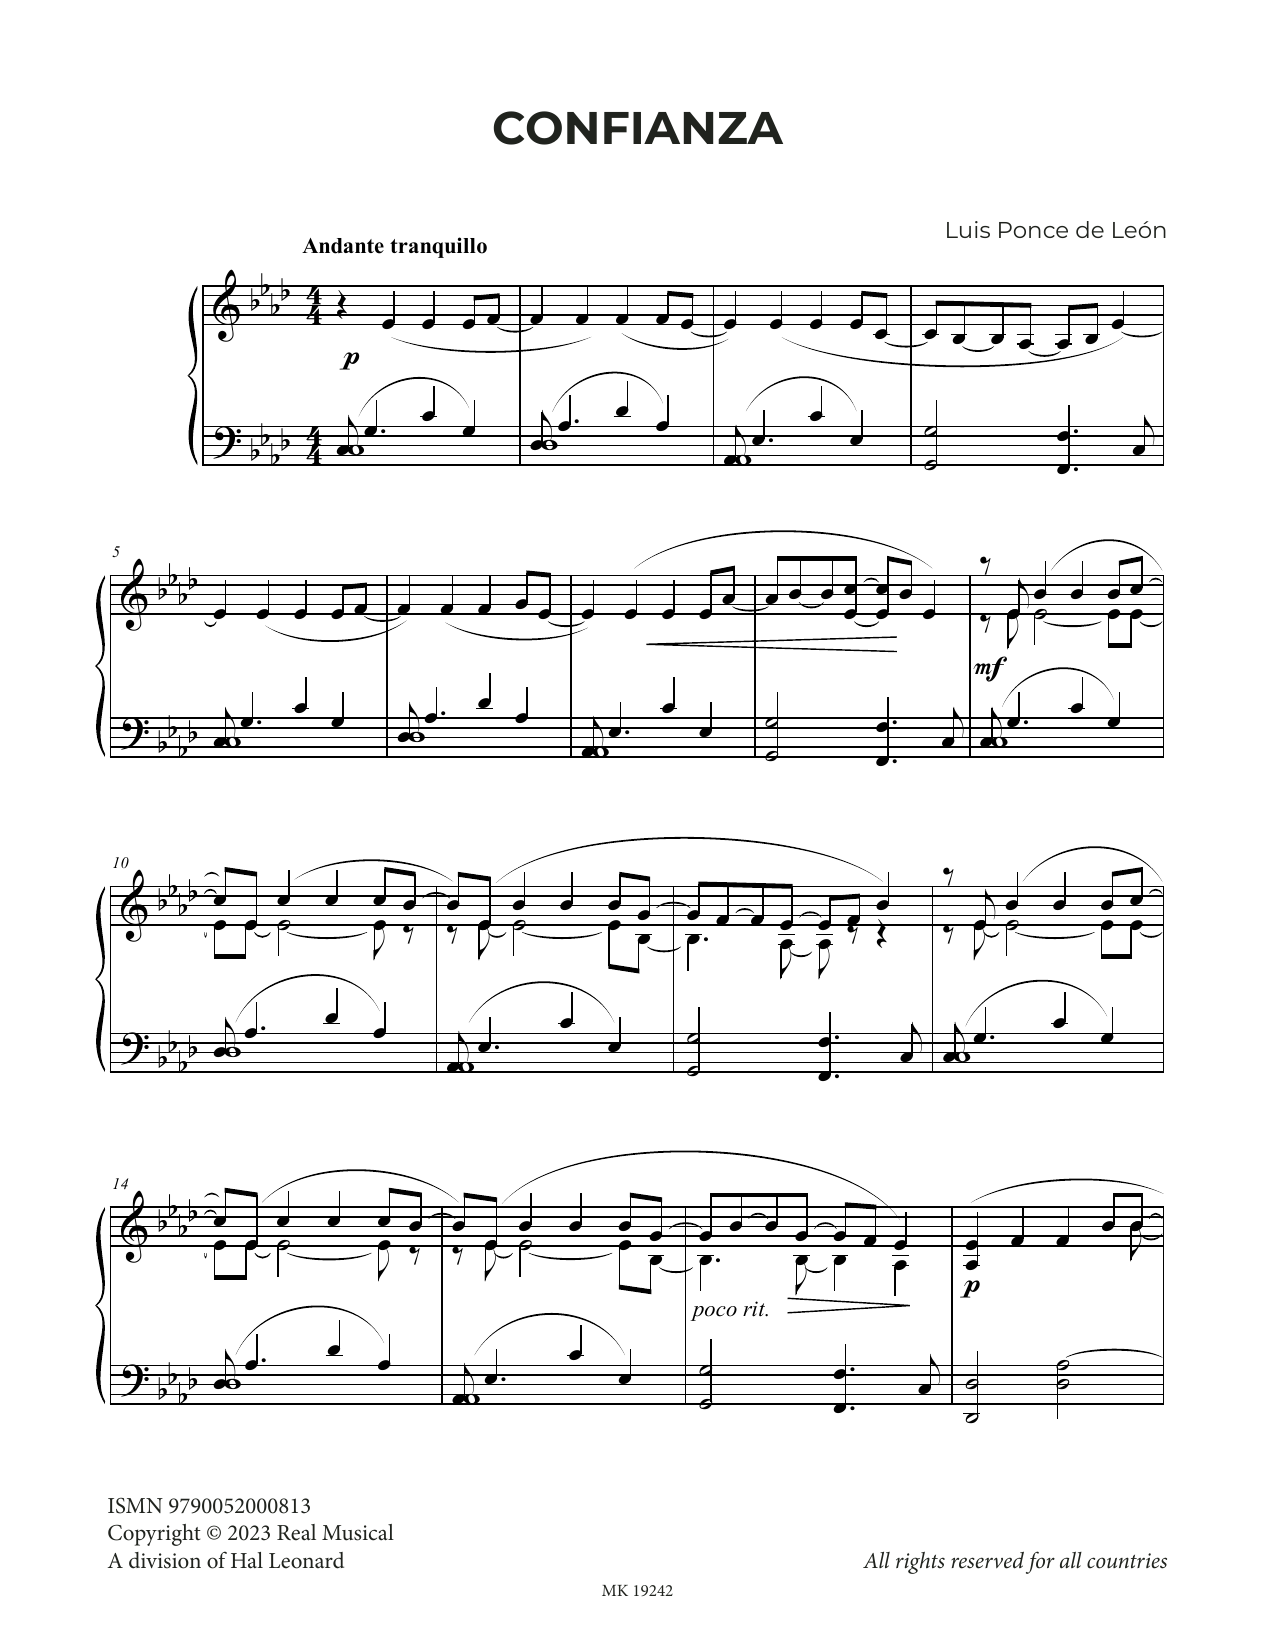 Luis Ponce de León Confianza Sheet Music Notes & Chords for Piano Solo - Download or Print PDF